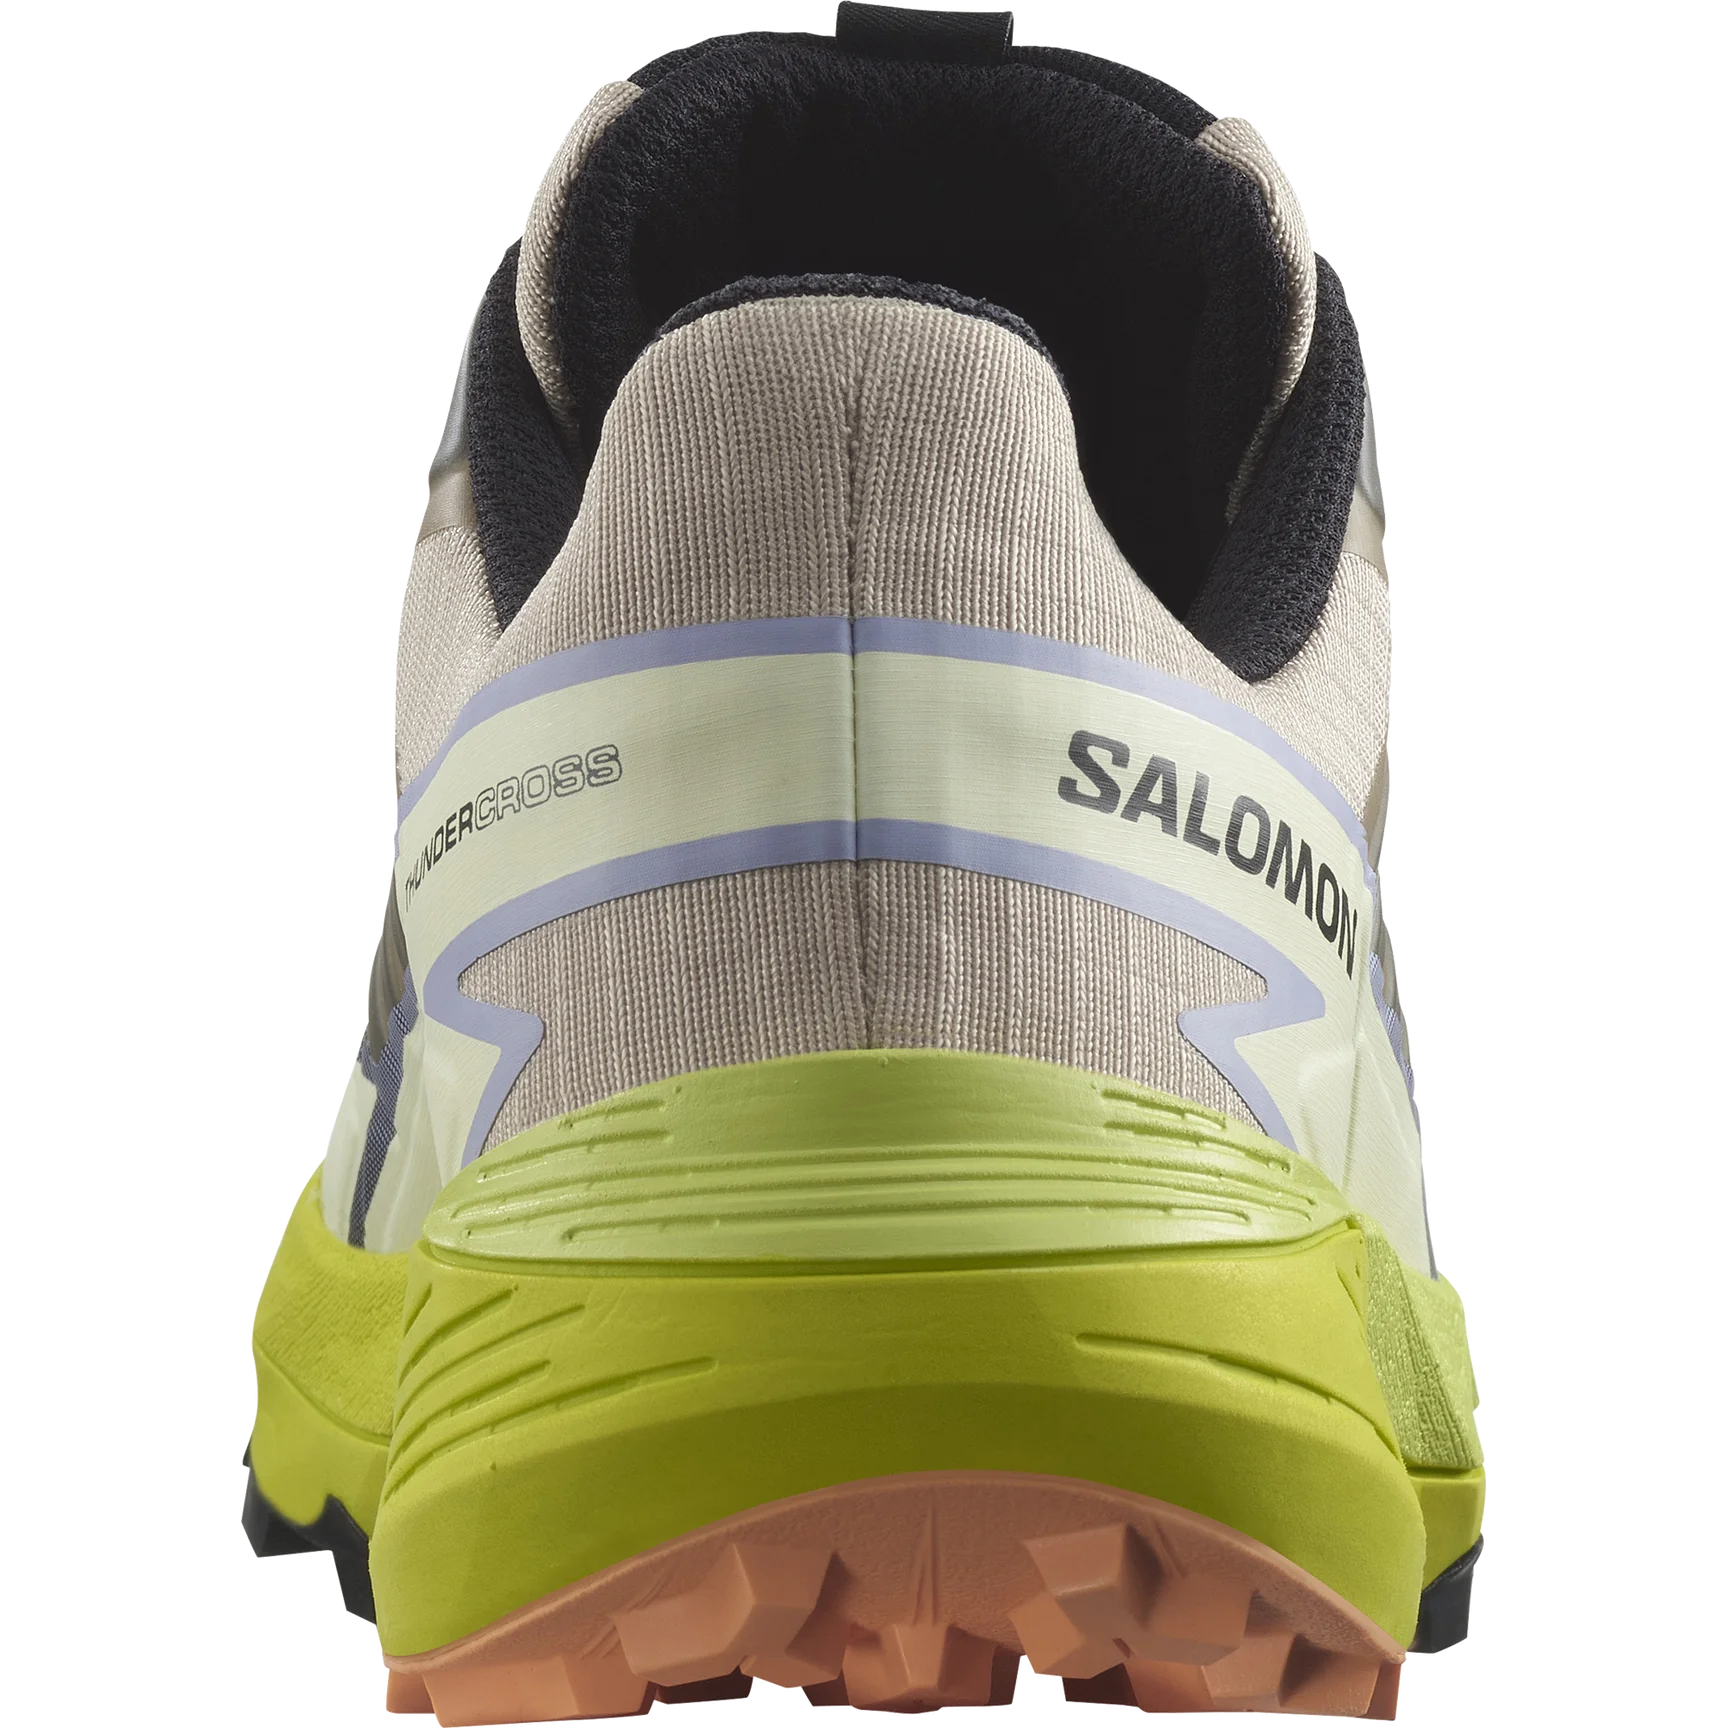 Salomon Thundercross Shoes (Women's) - Safari / Sulphur Spring / Black - Find Your Feet Australia Hobart Launceston Tasmania